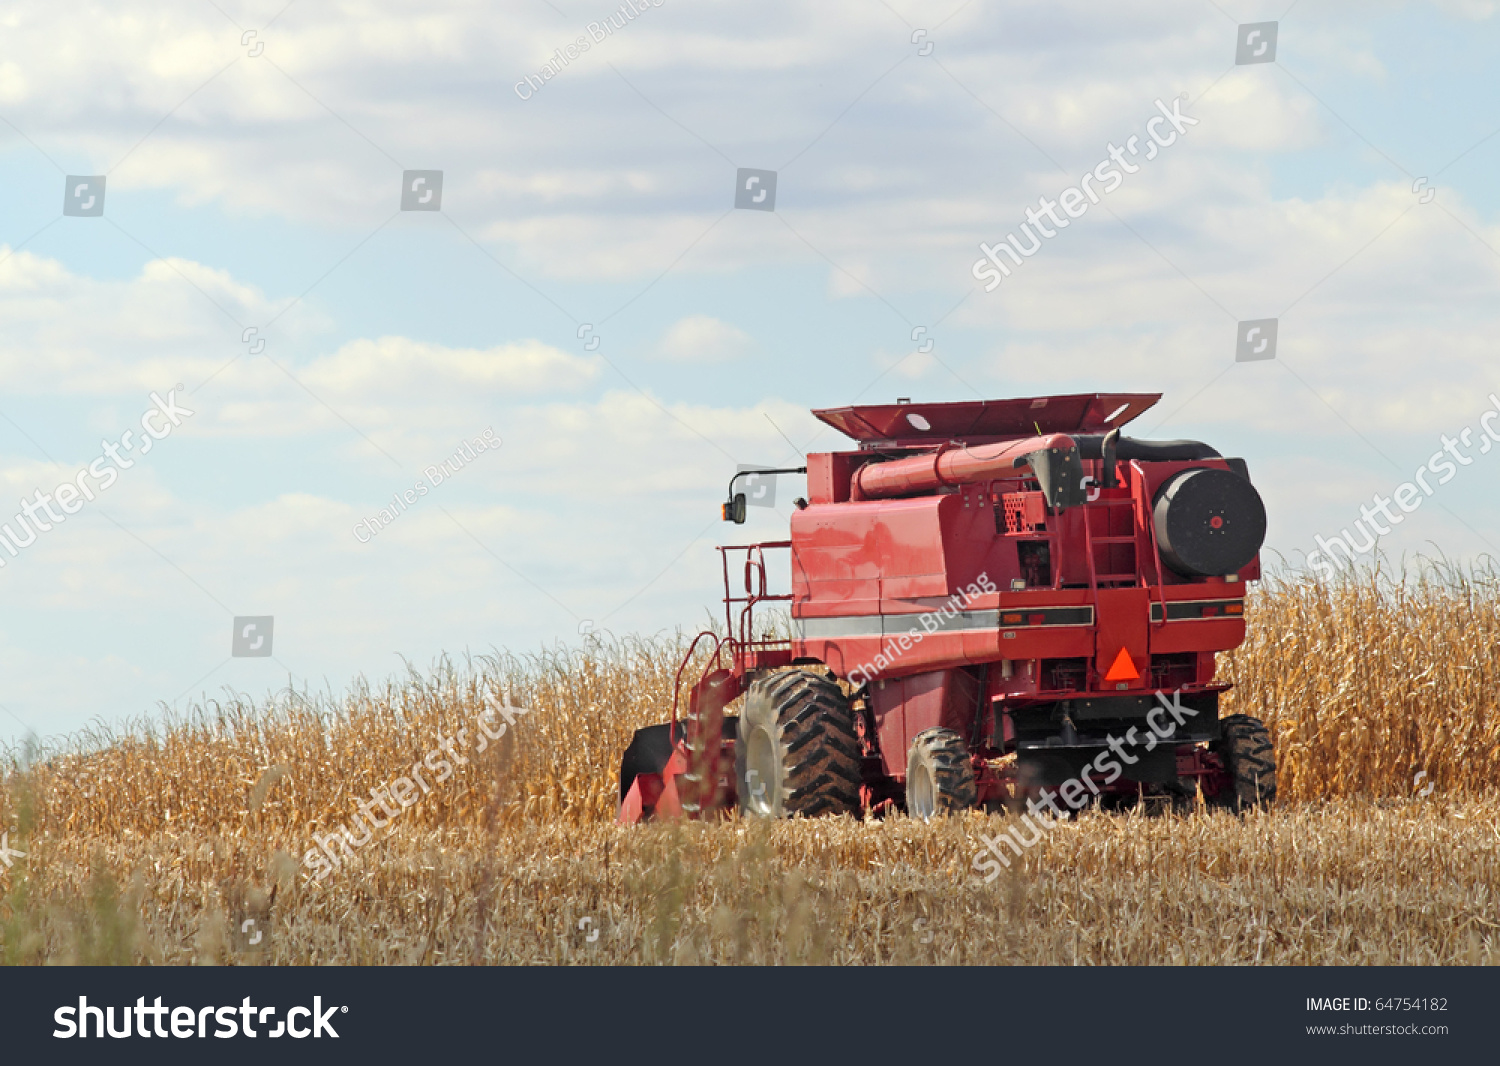 Red combine harvesting a farm field of corn #64754182